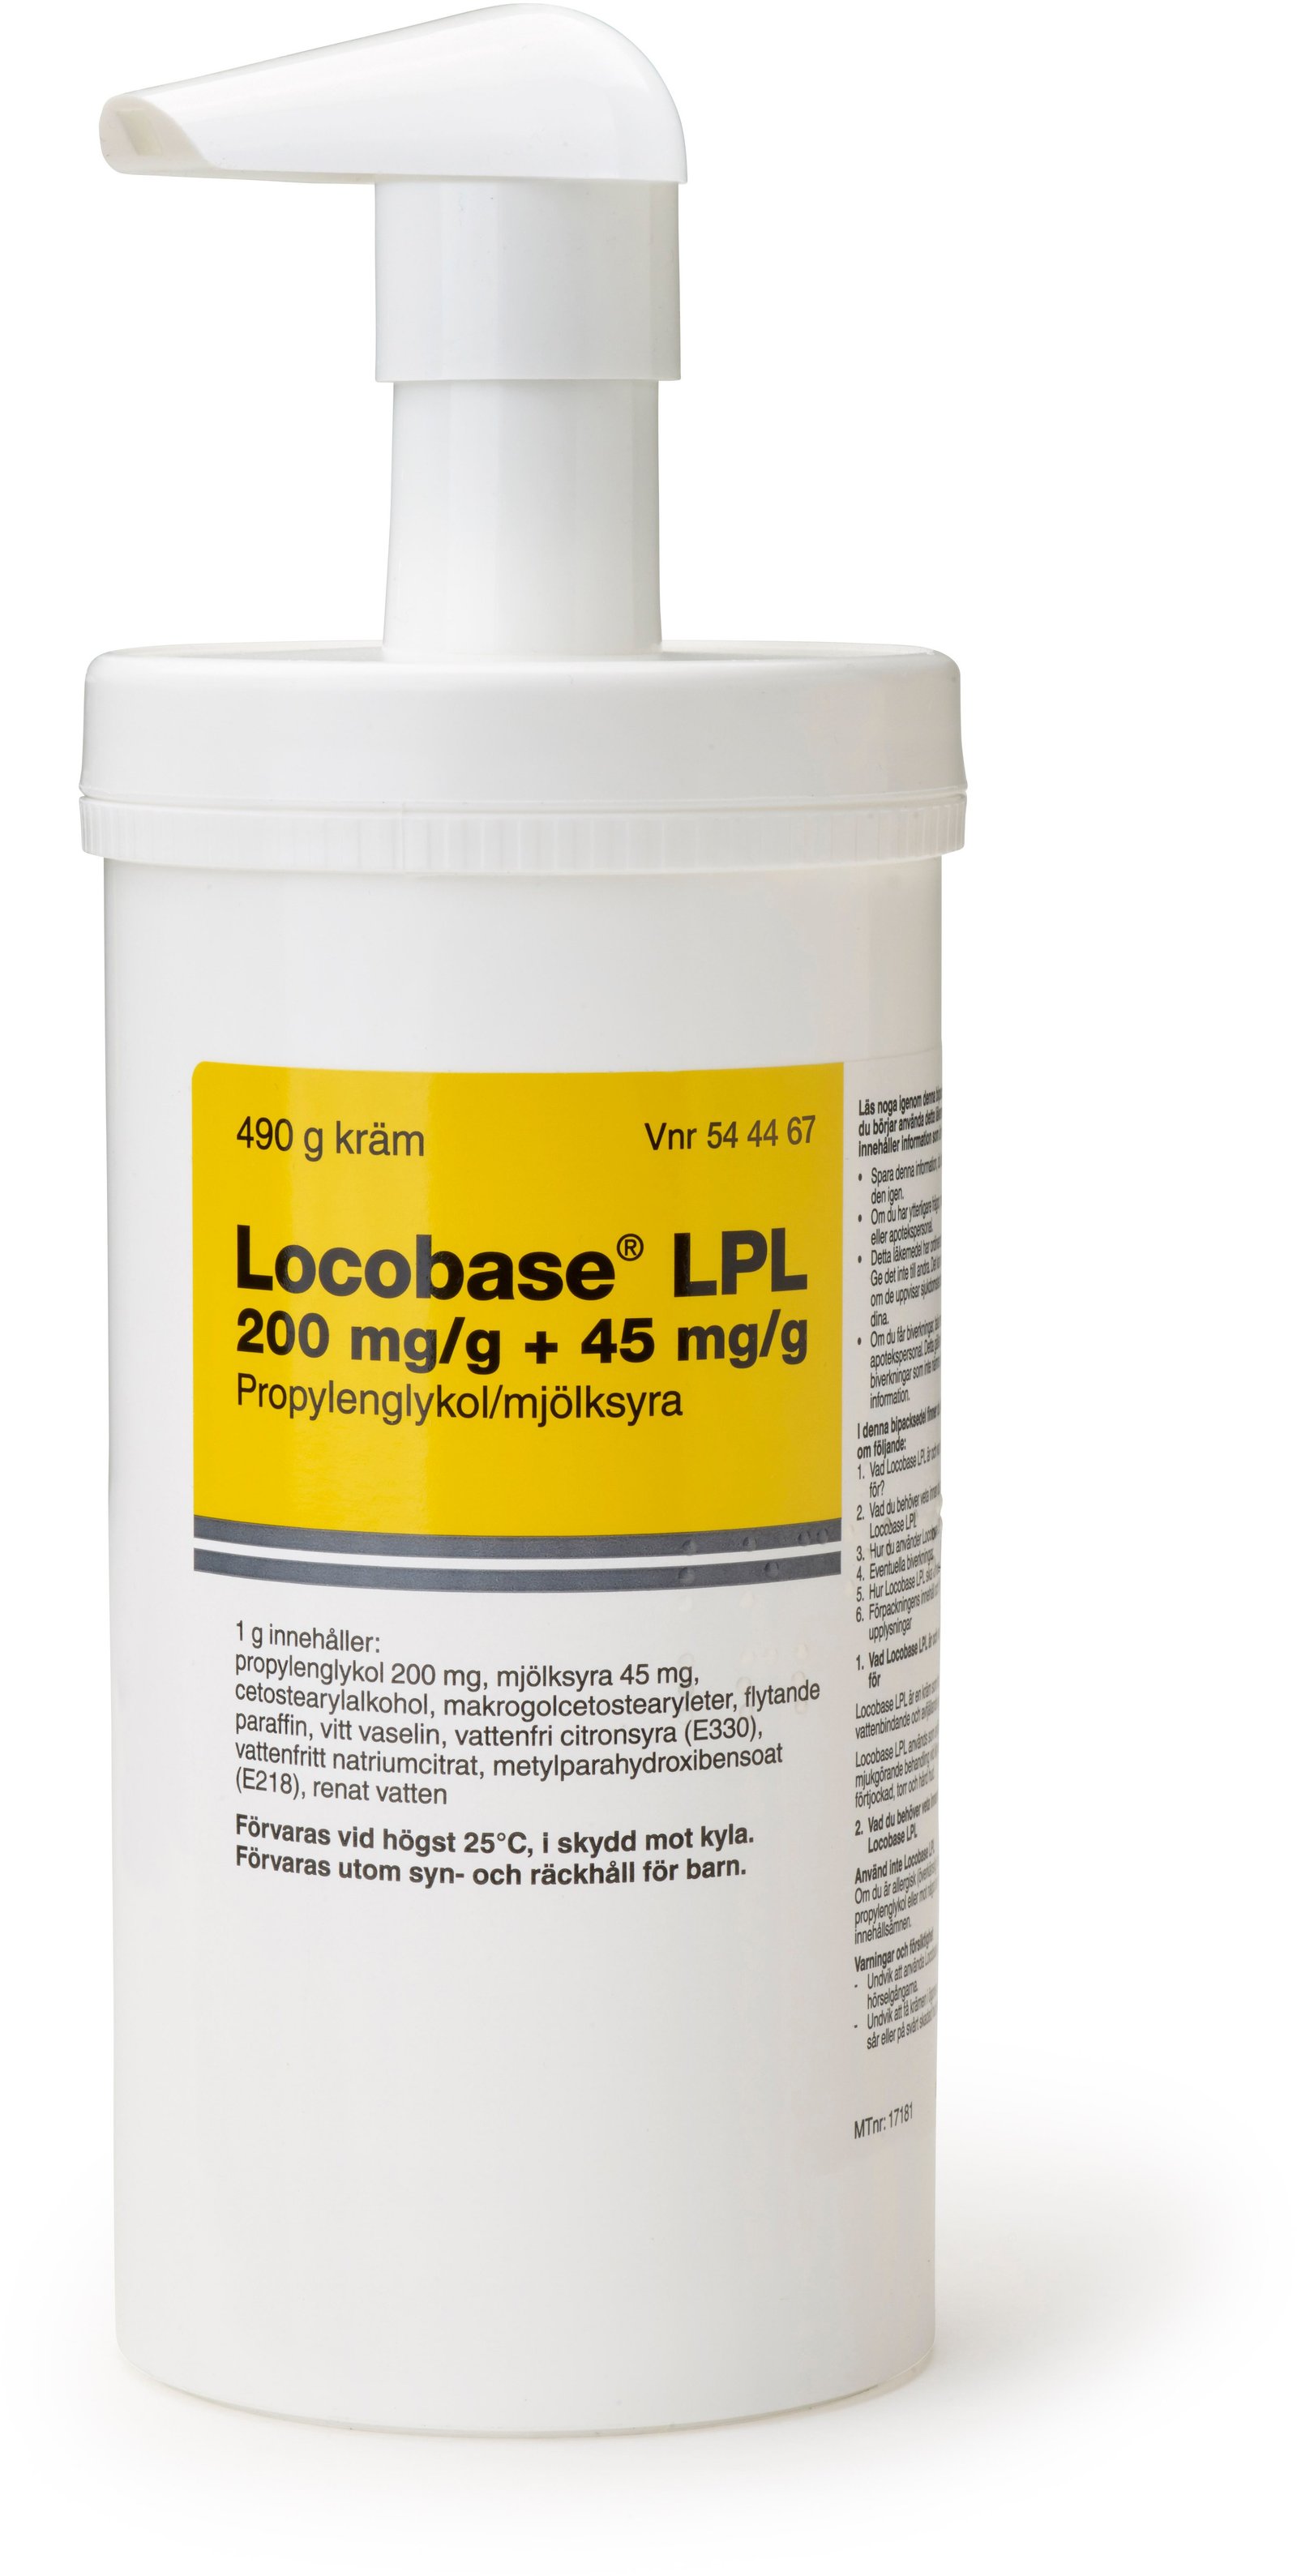 Locobase LPL 200 mg/g + 45 mg/g 400 g kräm